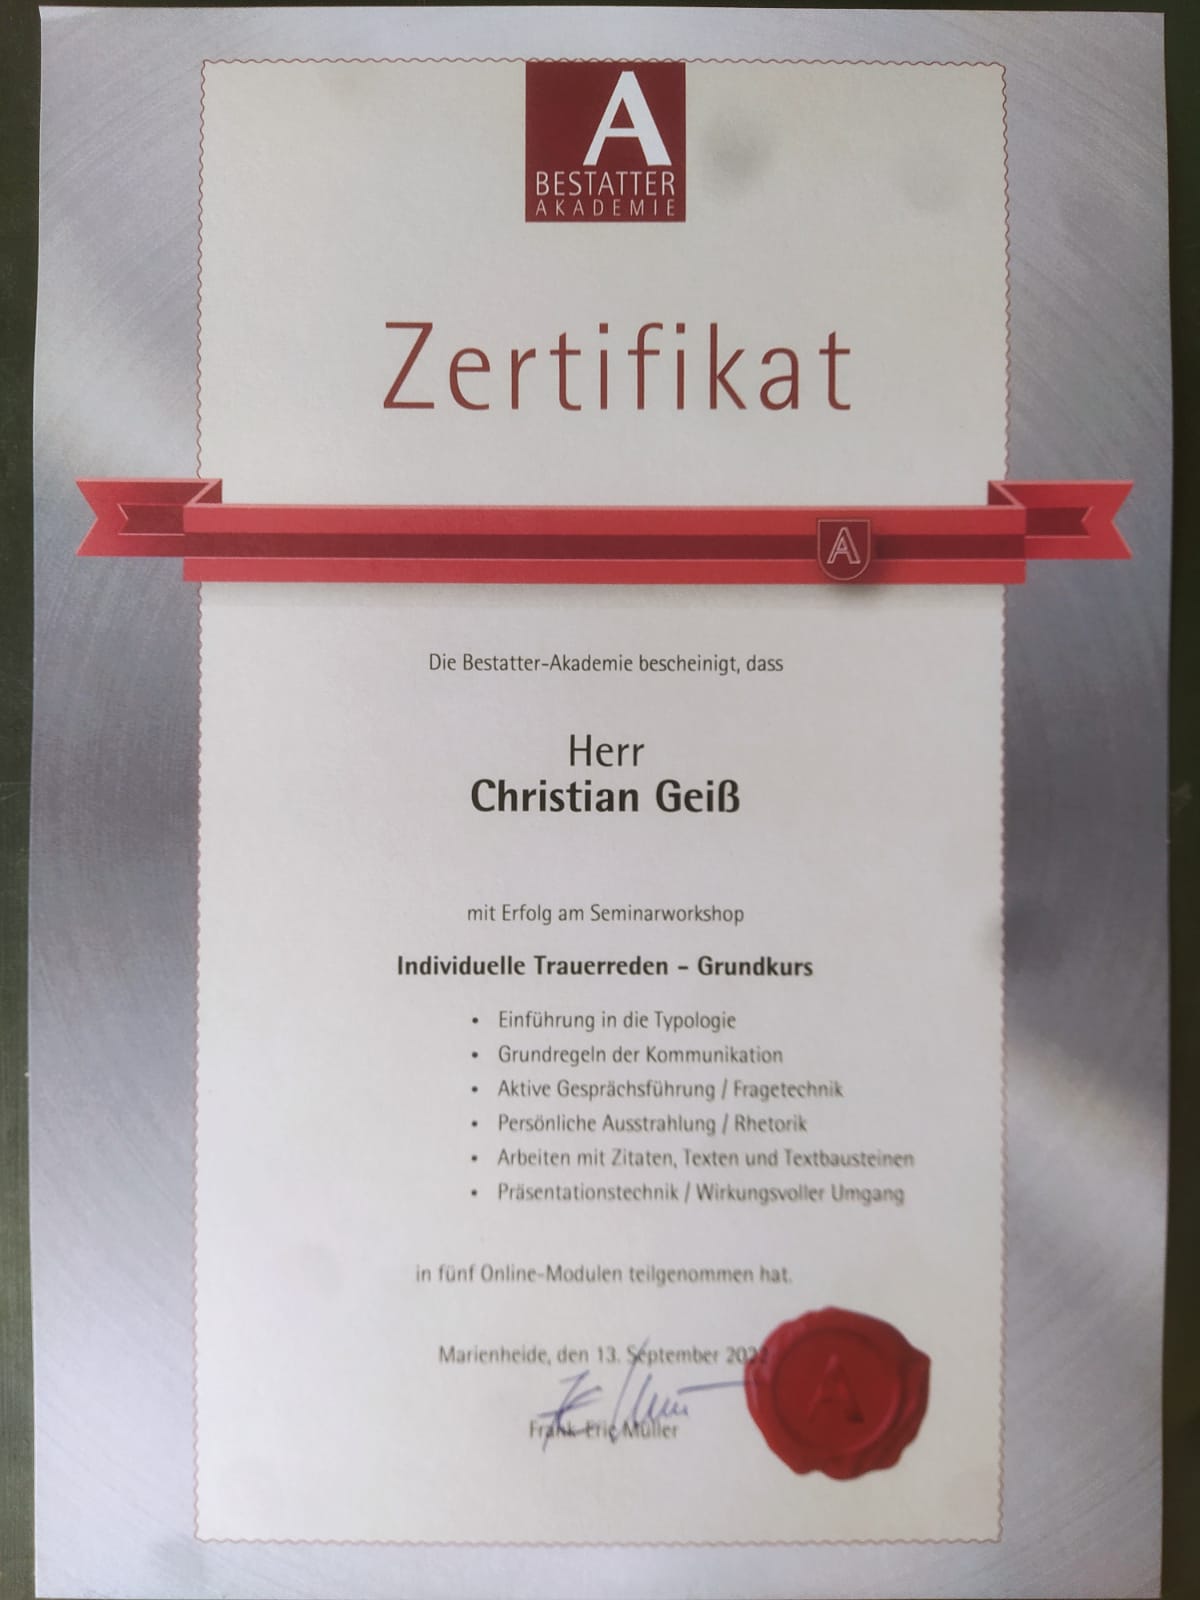 Zertifikat-Trauerredner-christian-geiss